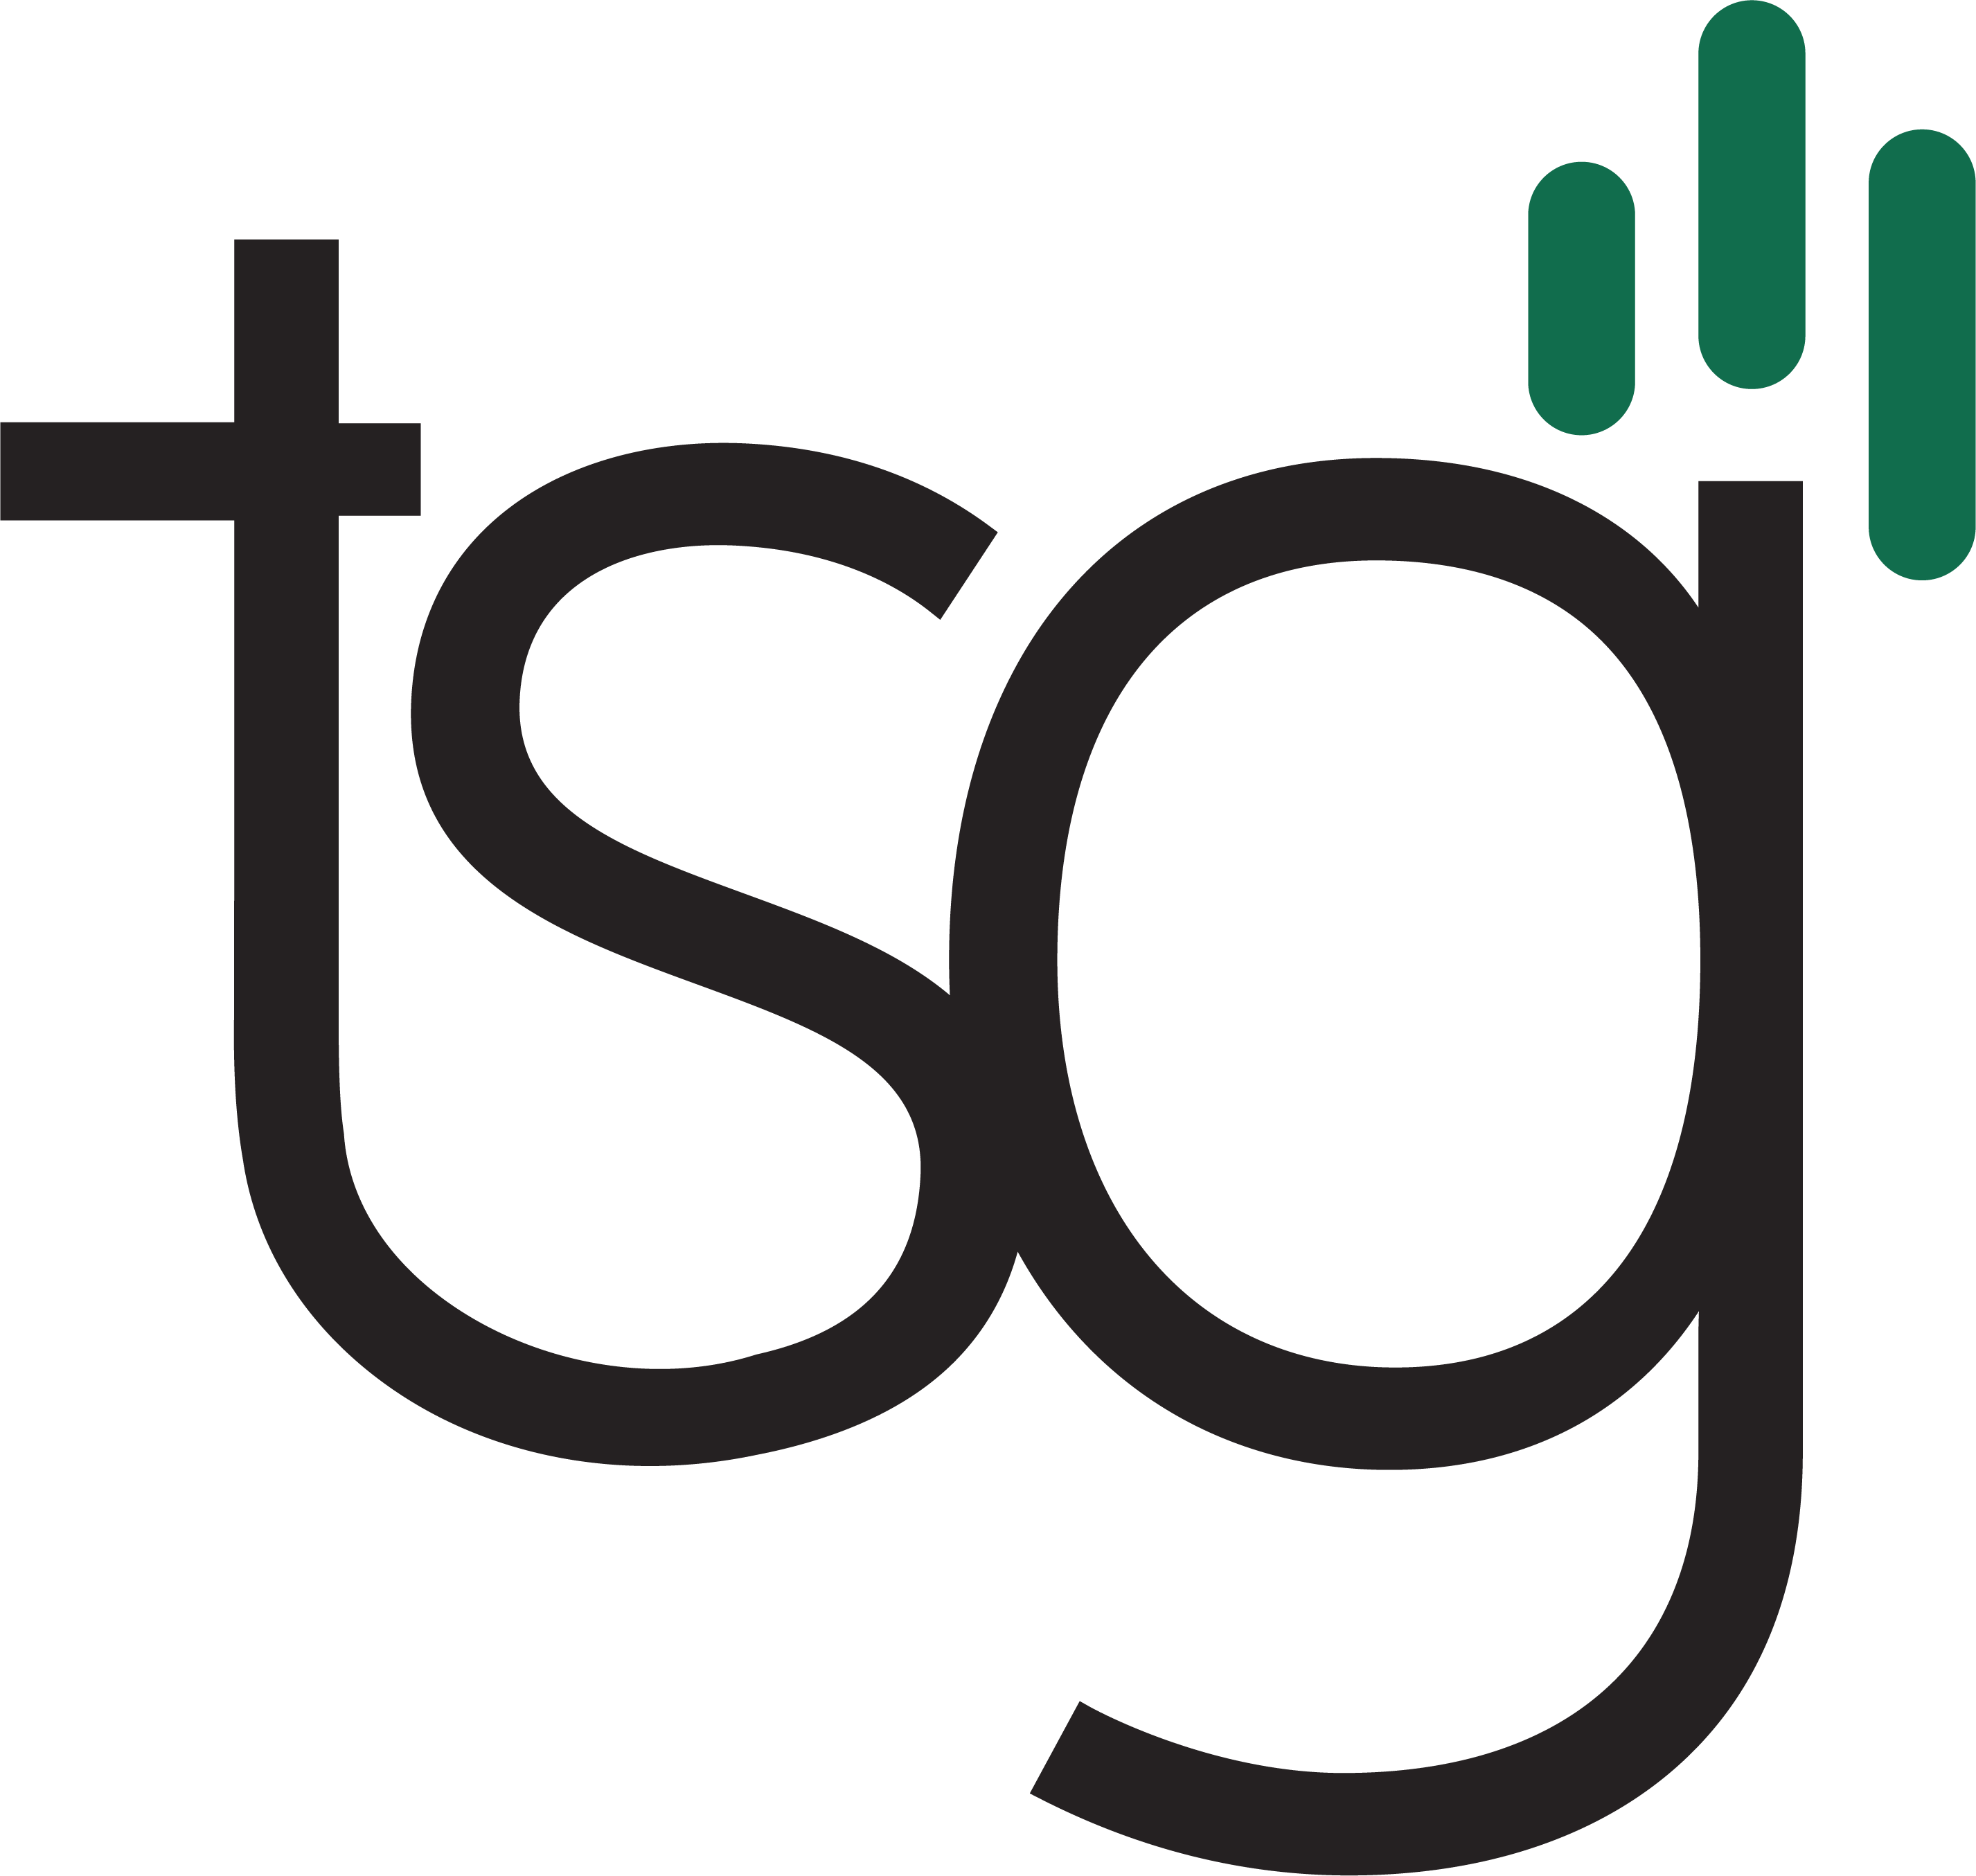 TSG Announces 2022 e